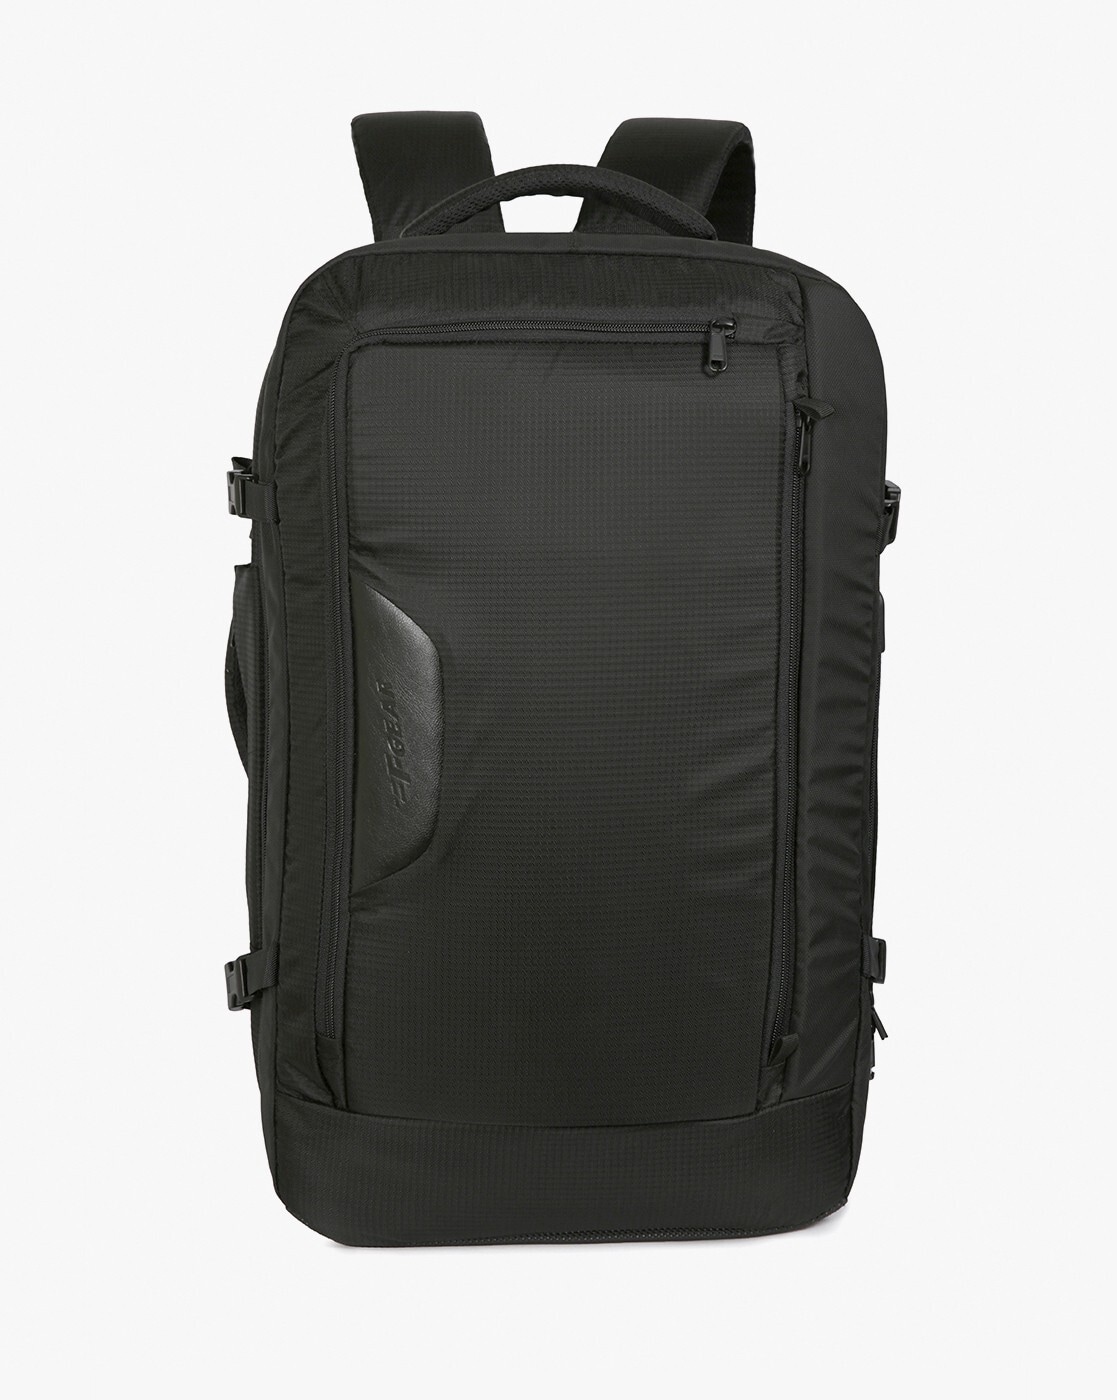 3 in 1 Convertible Laptop Backpack Messenger Bag — Pesann.com